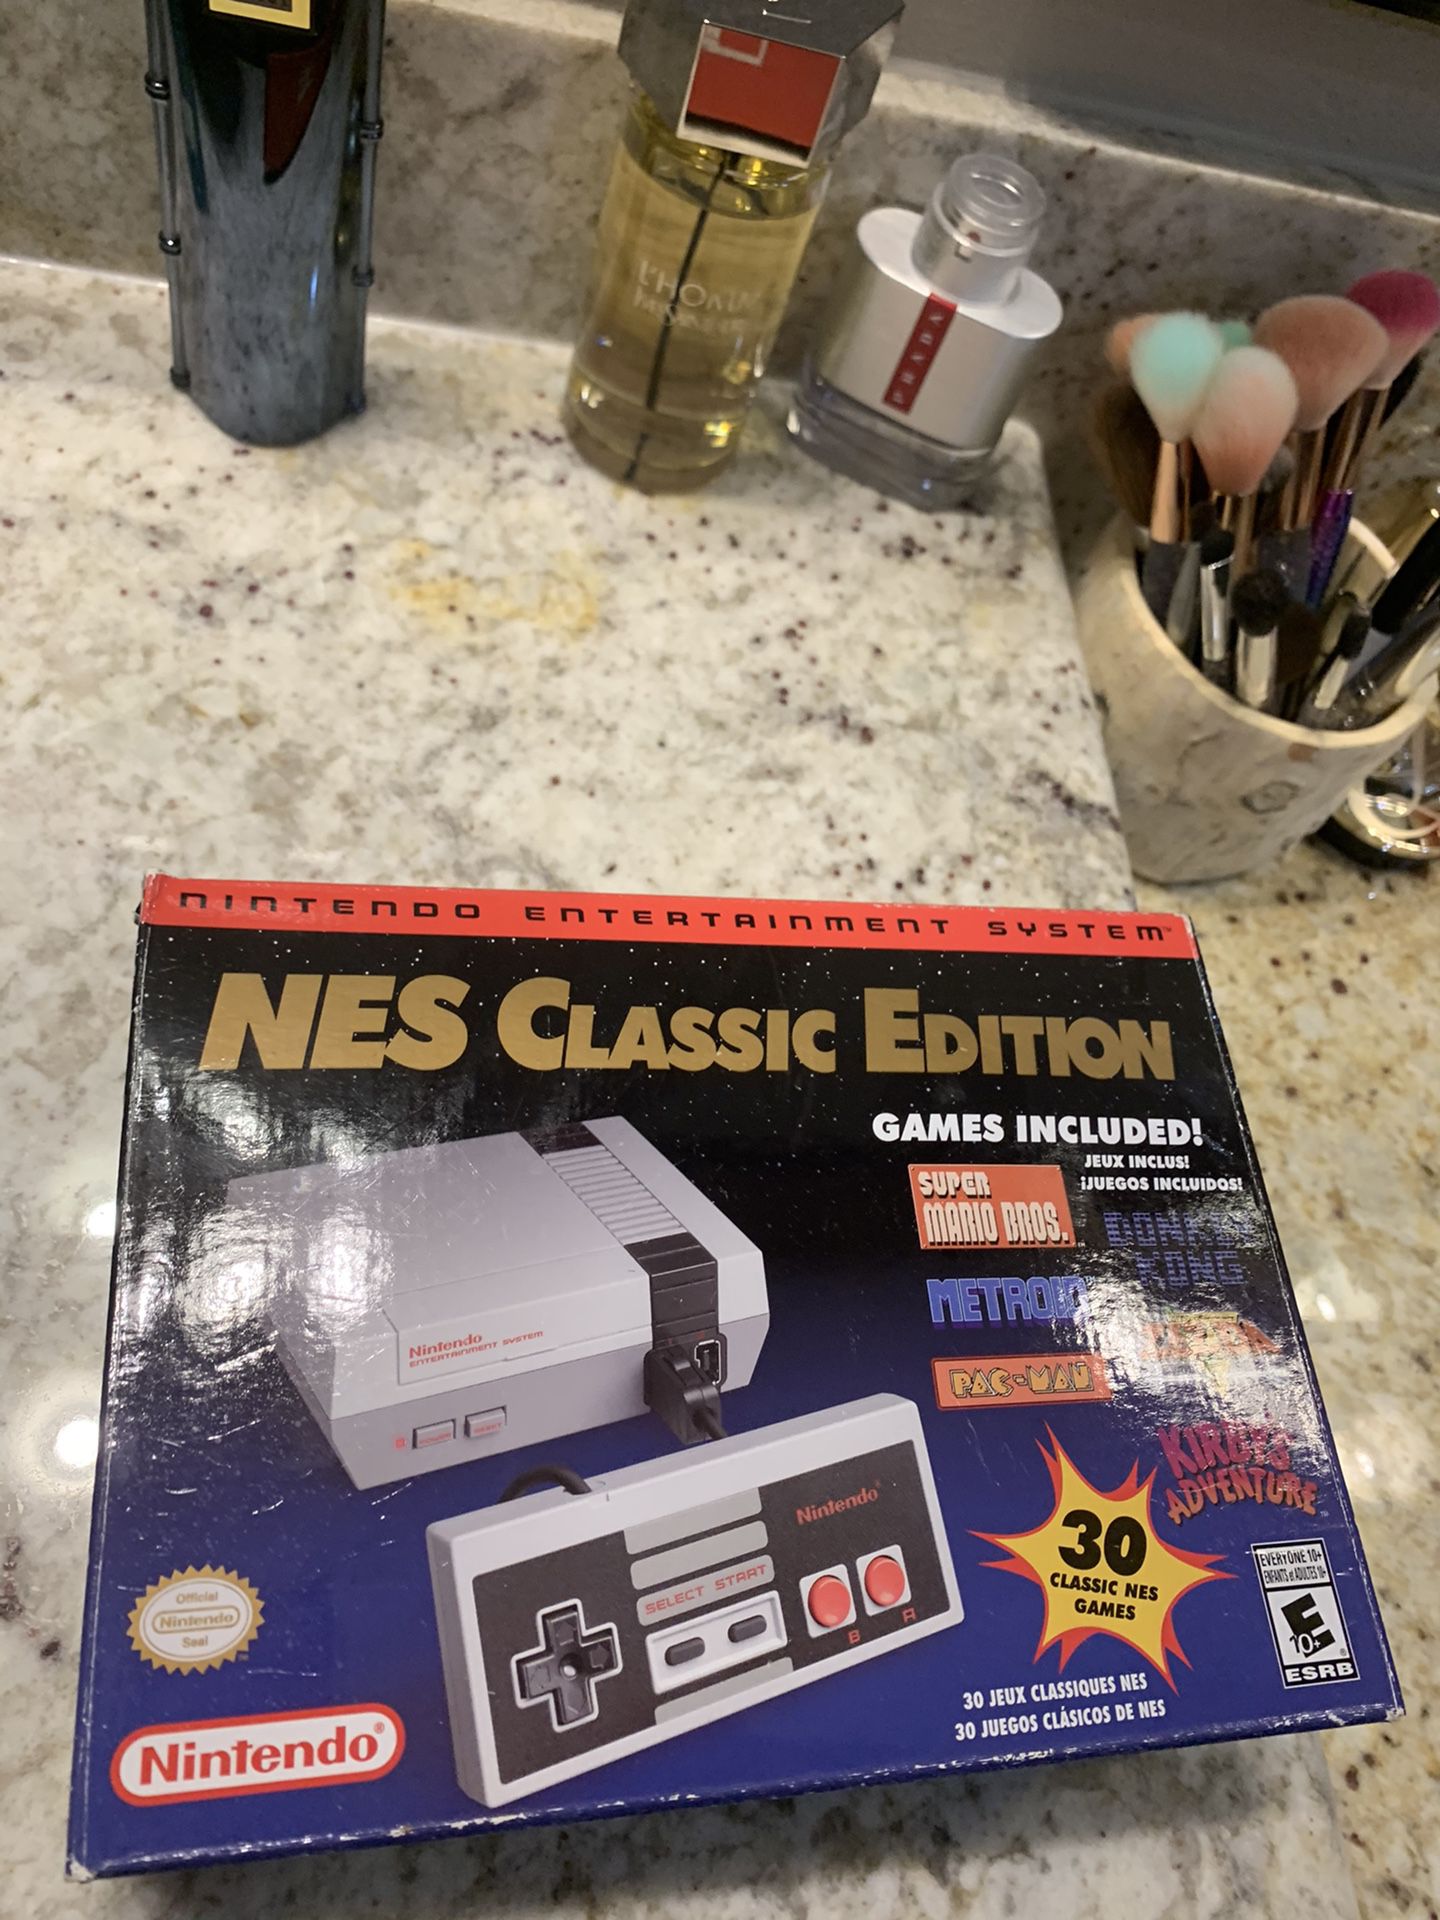 Nintendo Nes classic edition